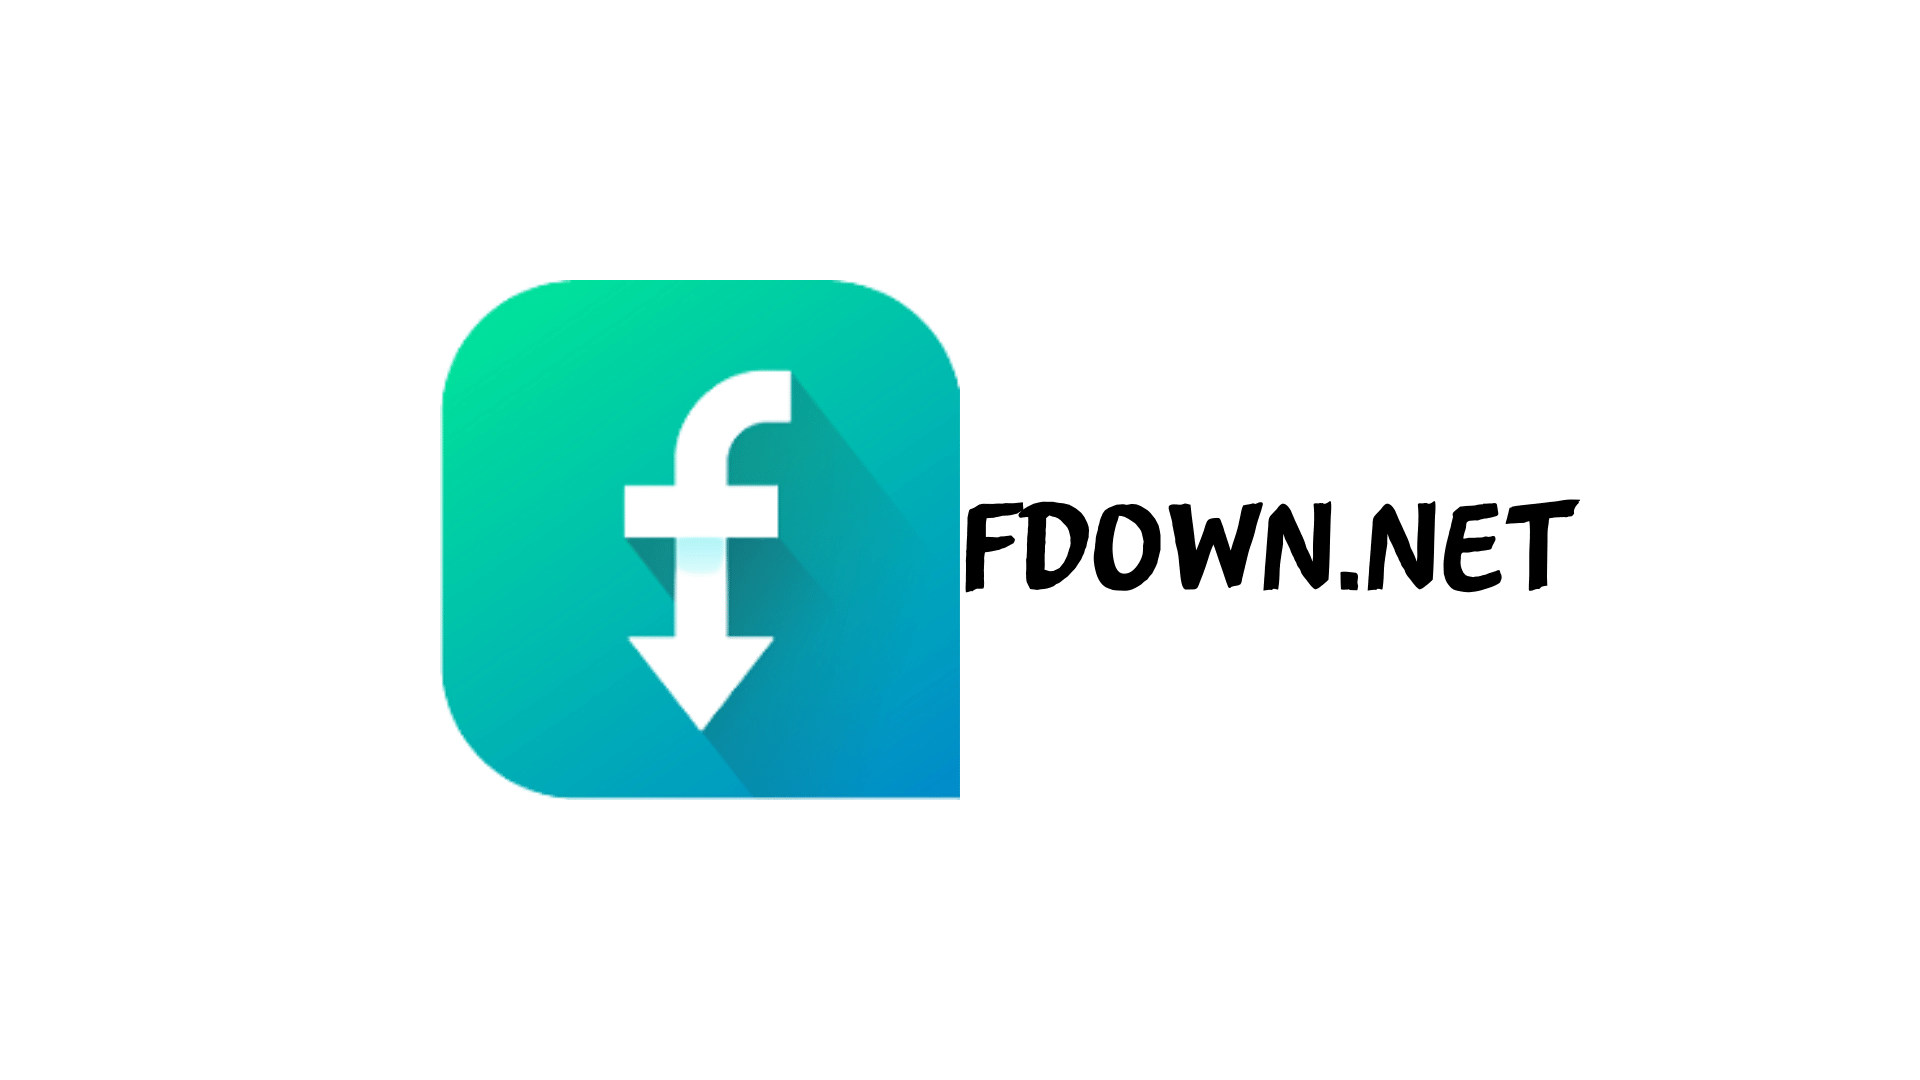 Fdown.net